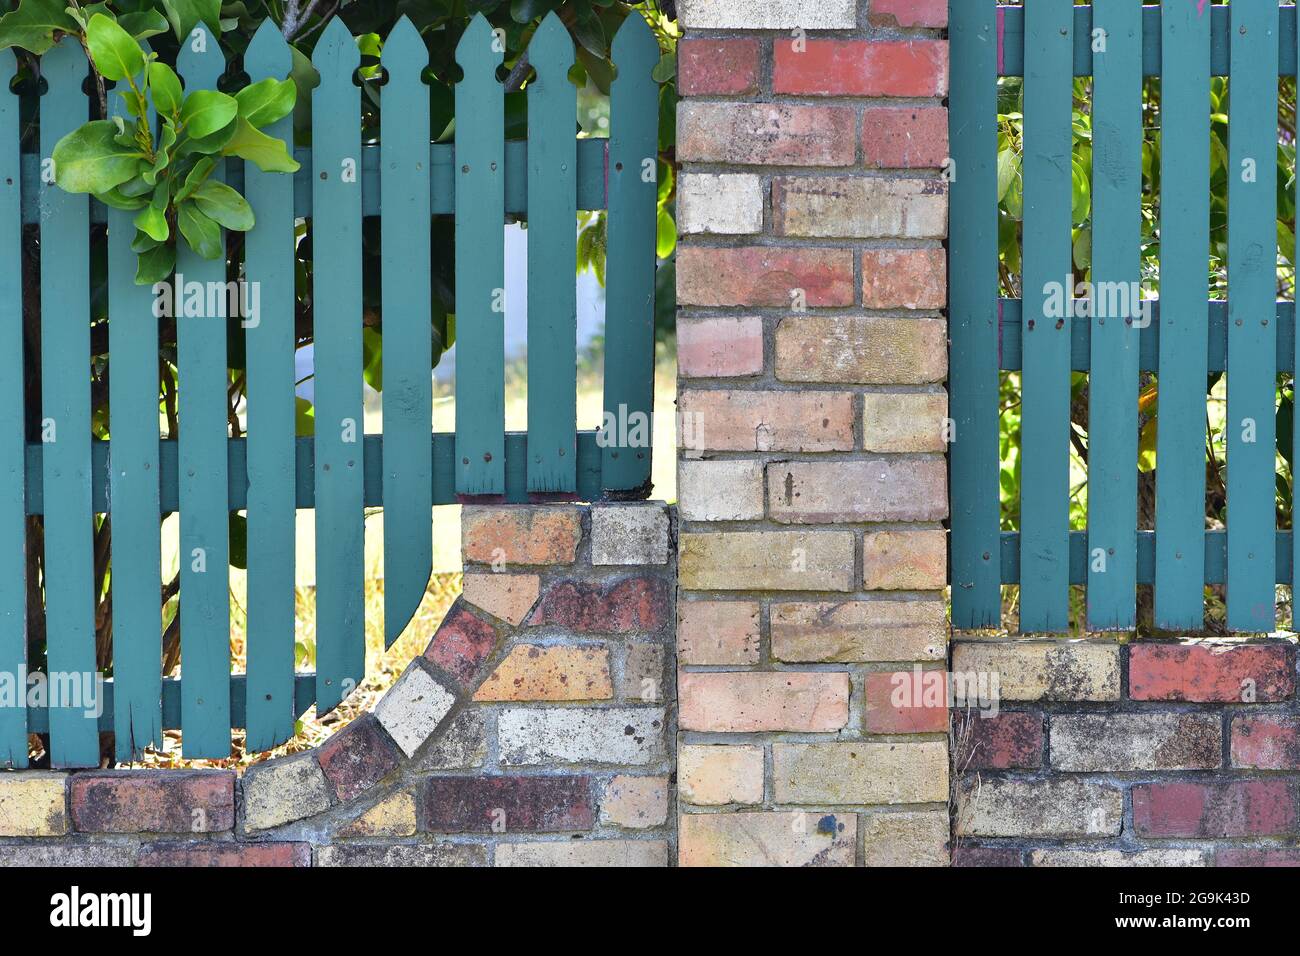 Picket yard fence with brick and mortar base and pillars. Stock Photo